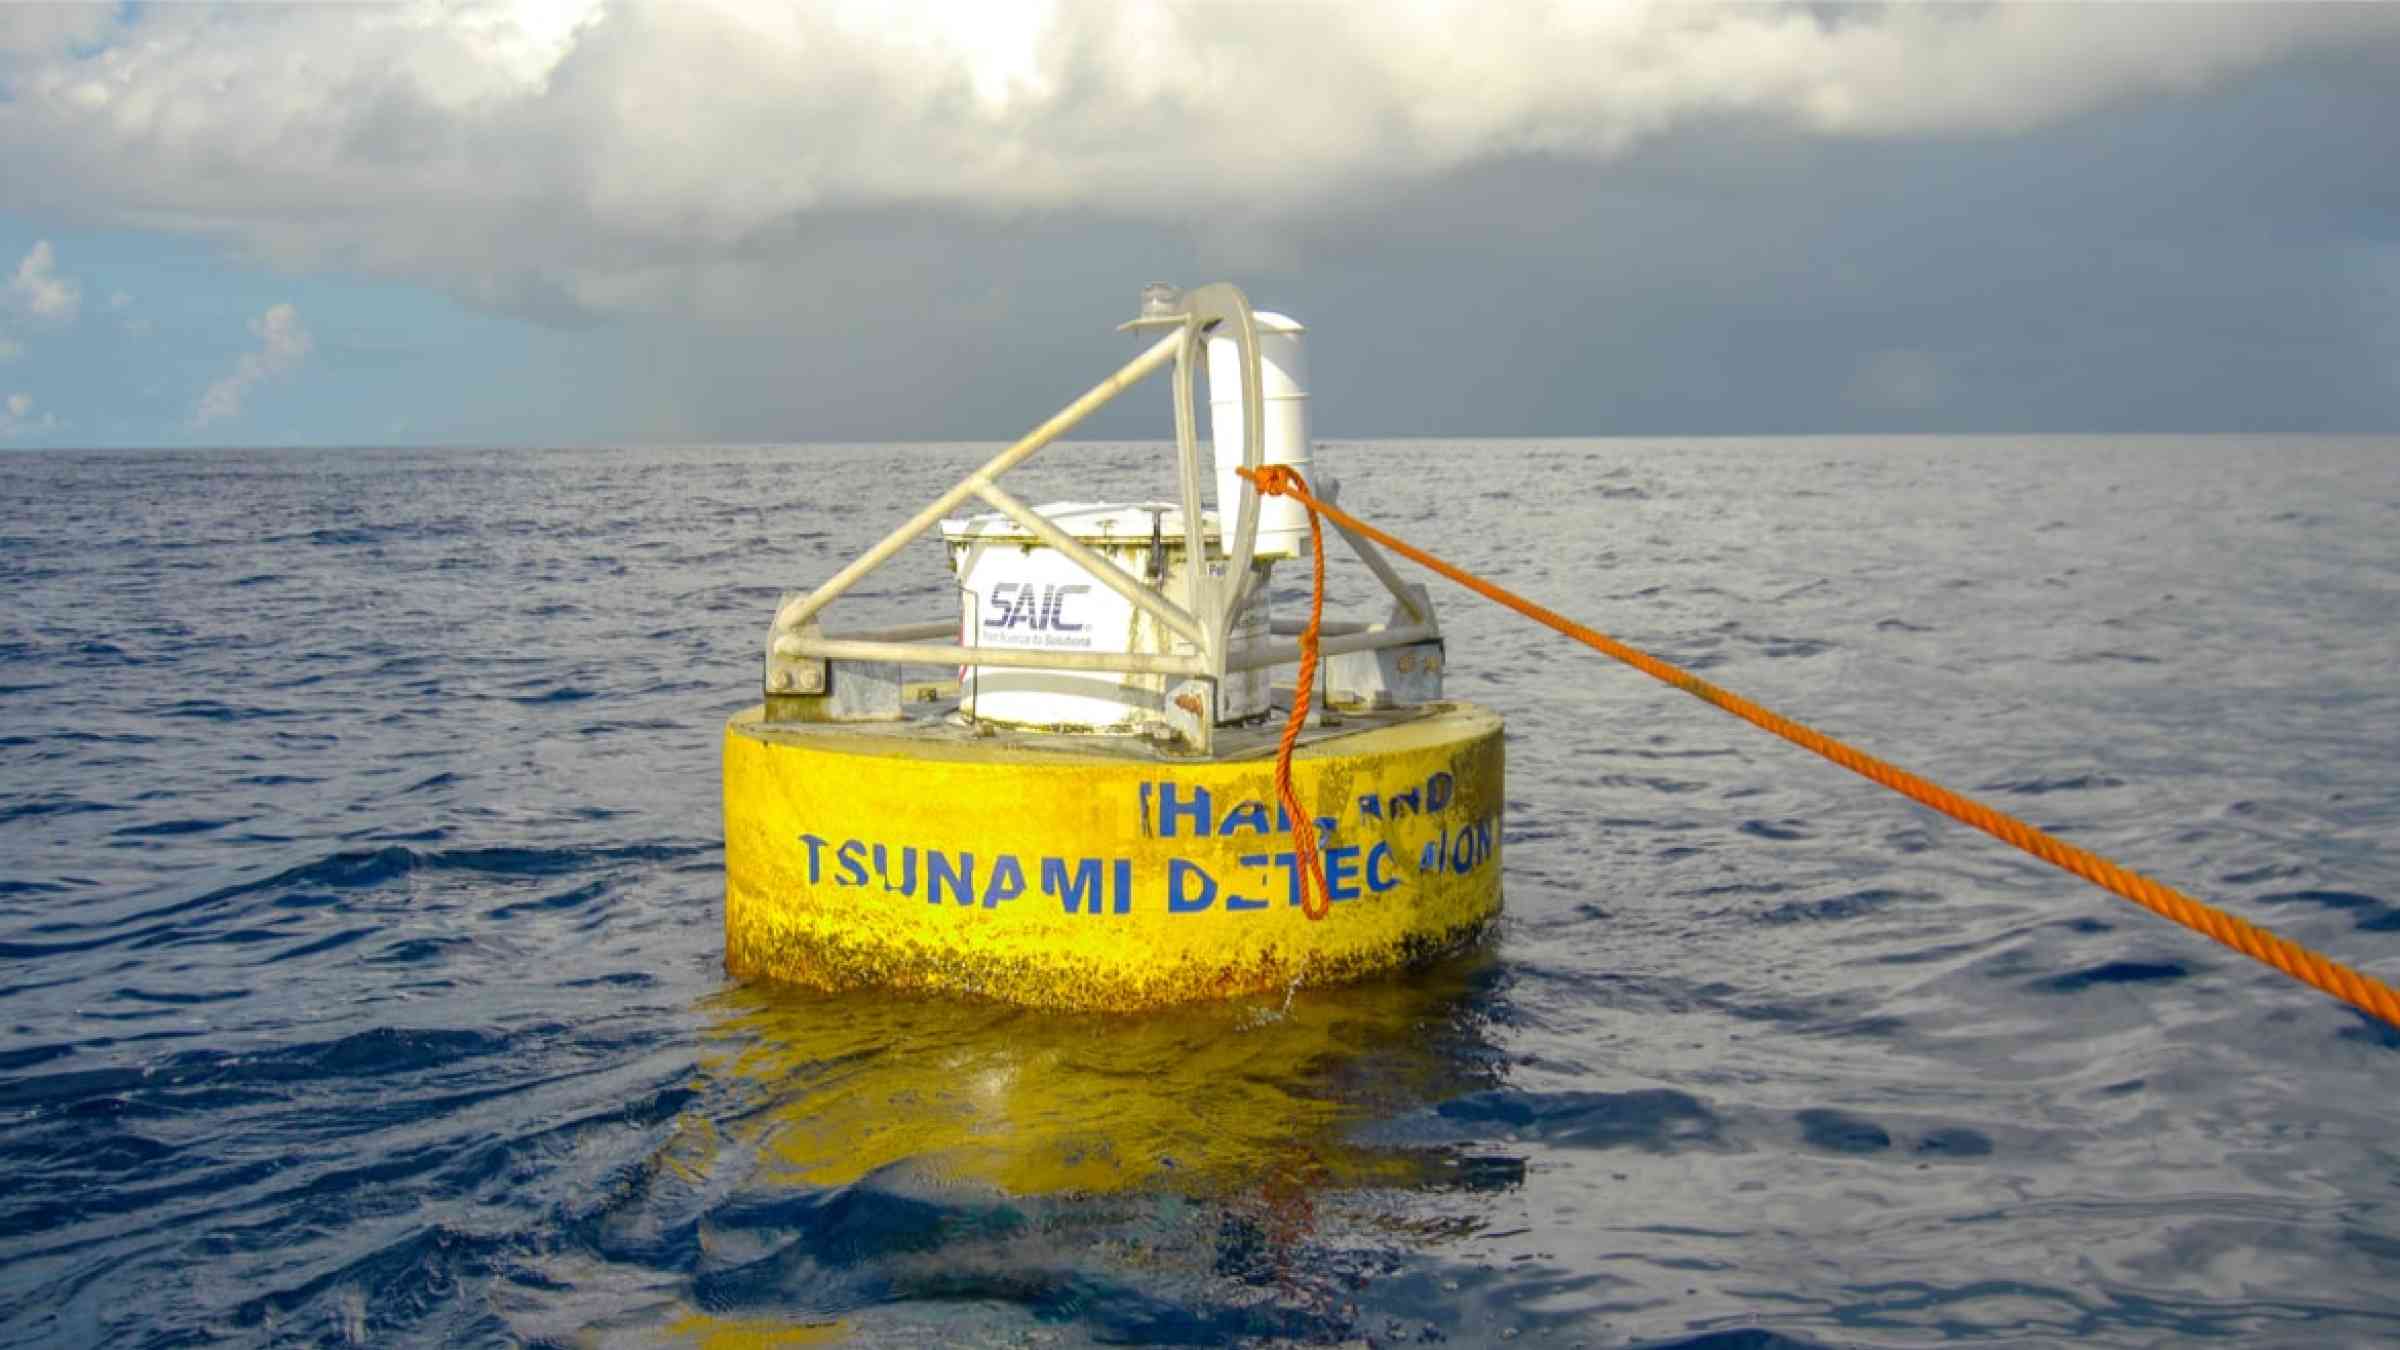 Tsunami detection buoy floats in the Andaman sea, India (2018)